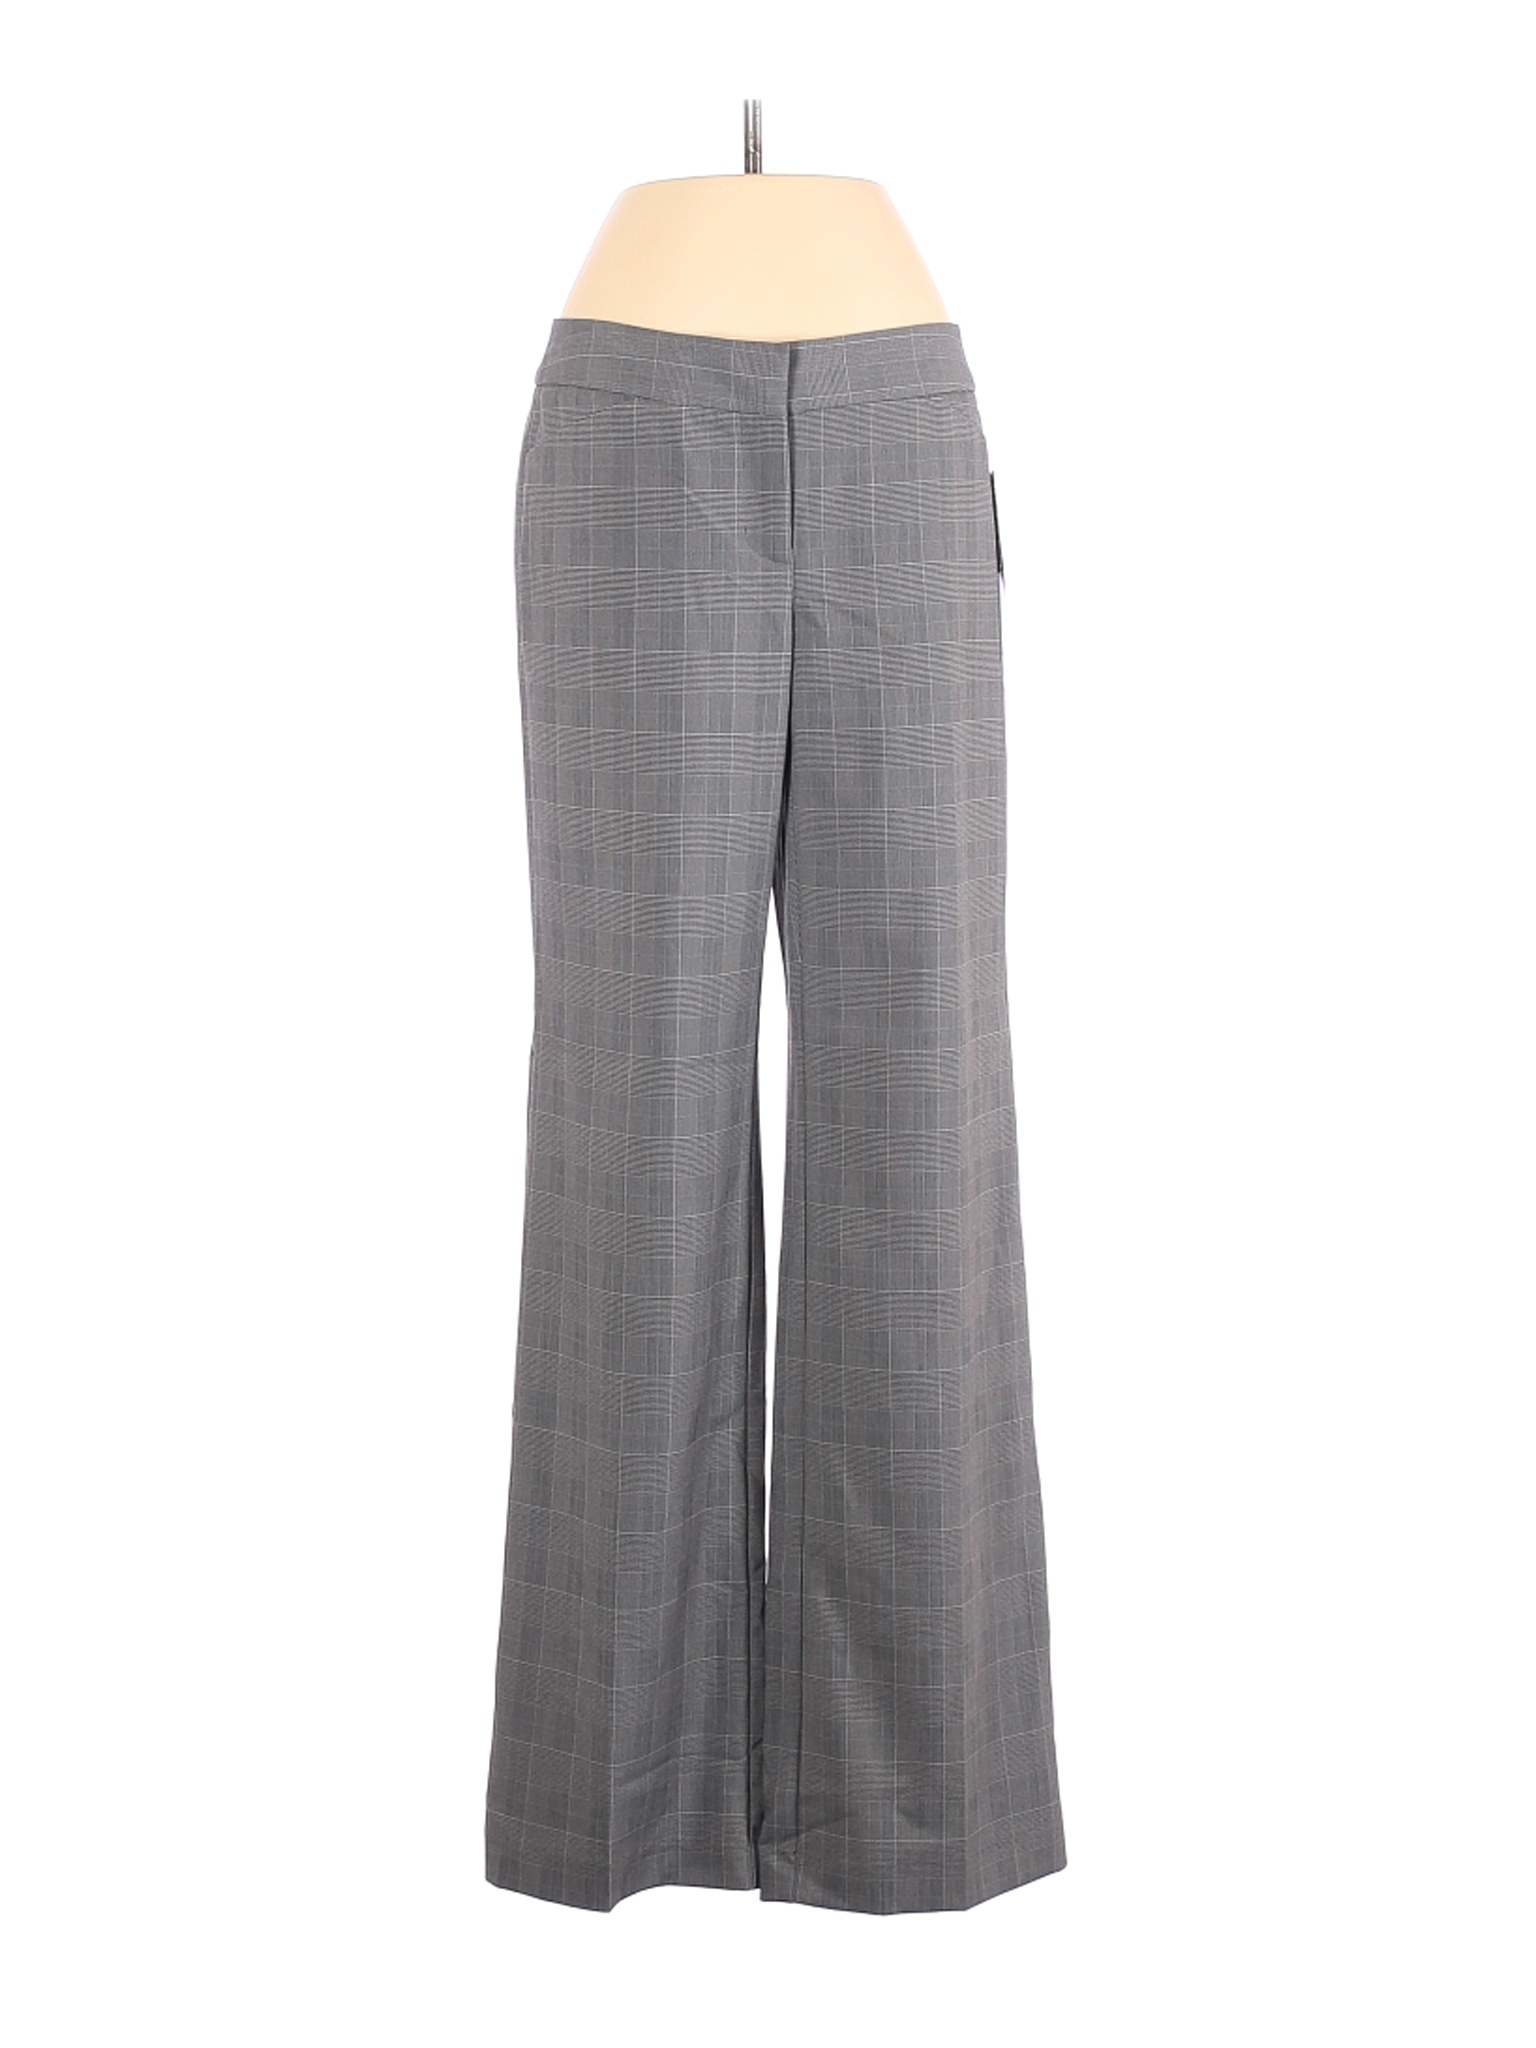 NWT Alfani Women Gray Dress Pants 2 | eBay